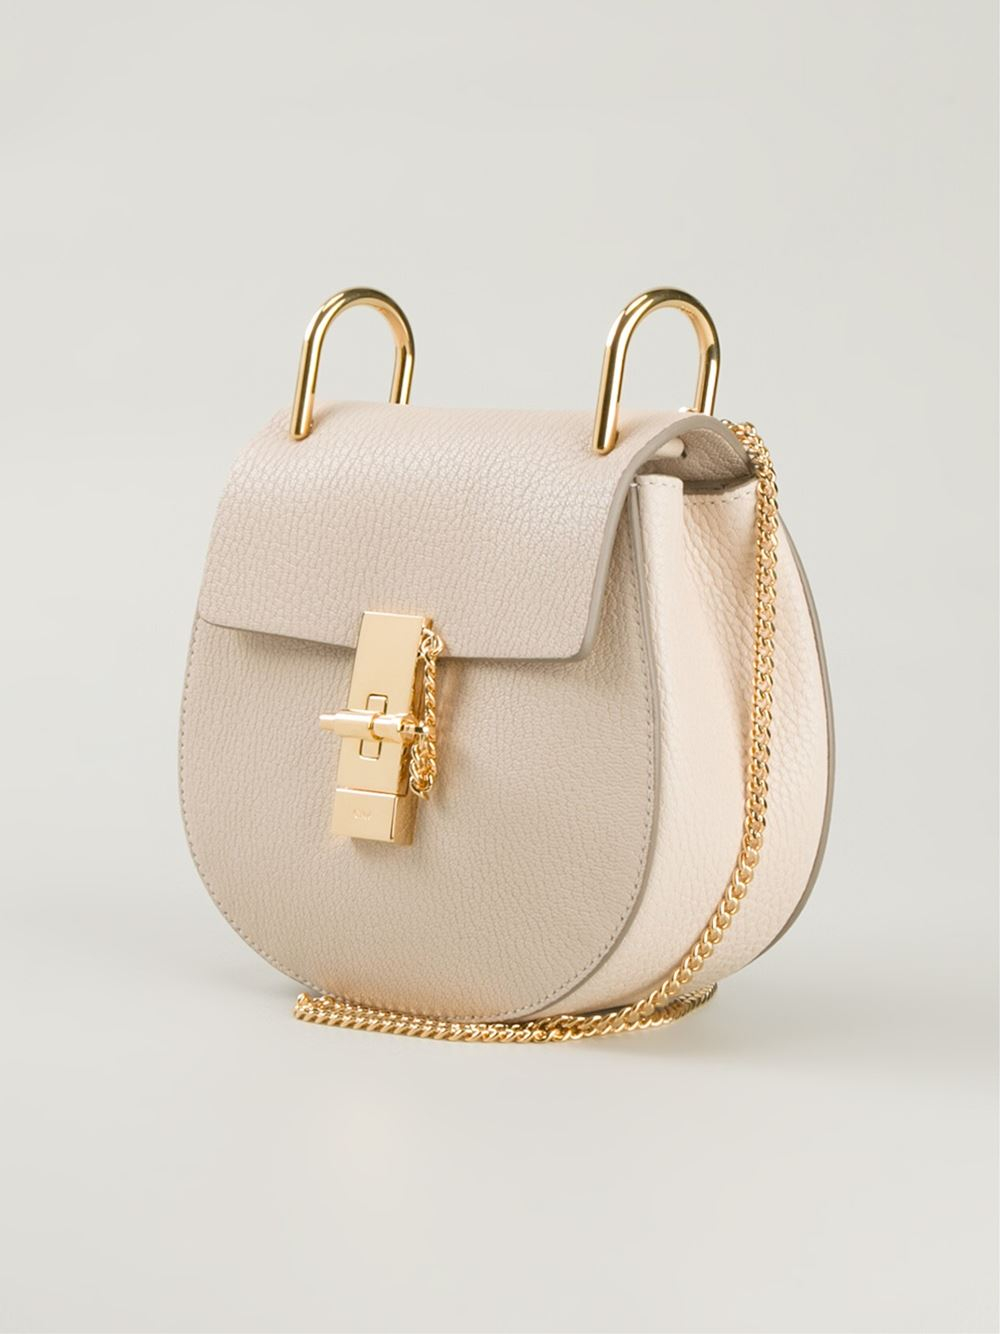 chloe purses - Chlo Drew Leather Cross-Body Bag in Beige (nude \u0026amp; neutrals) | Lyst